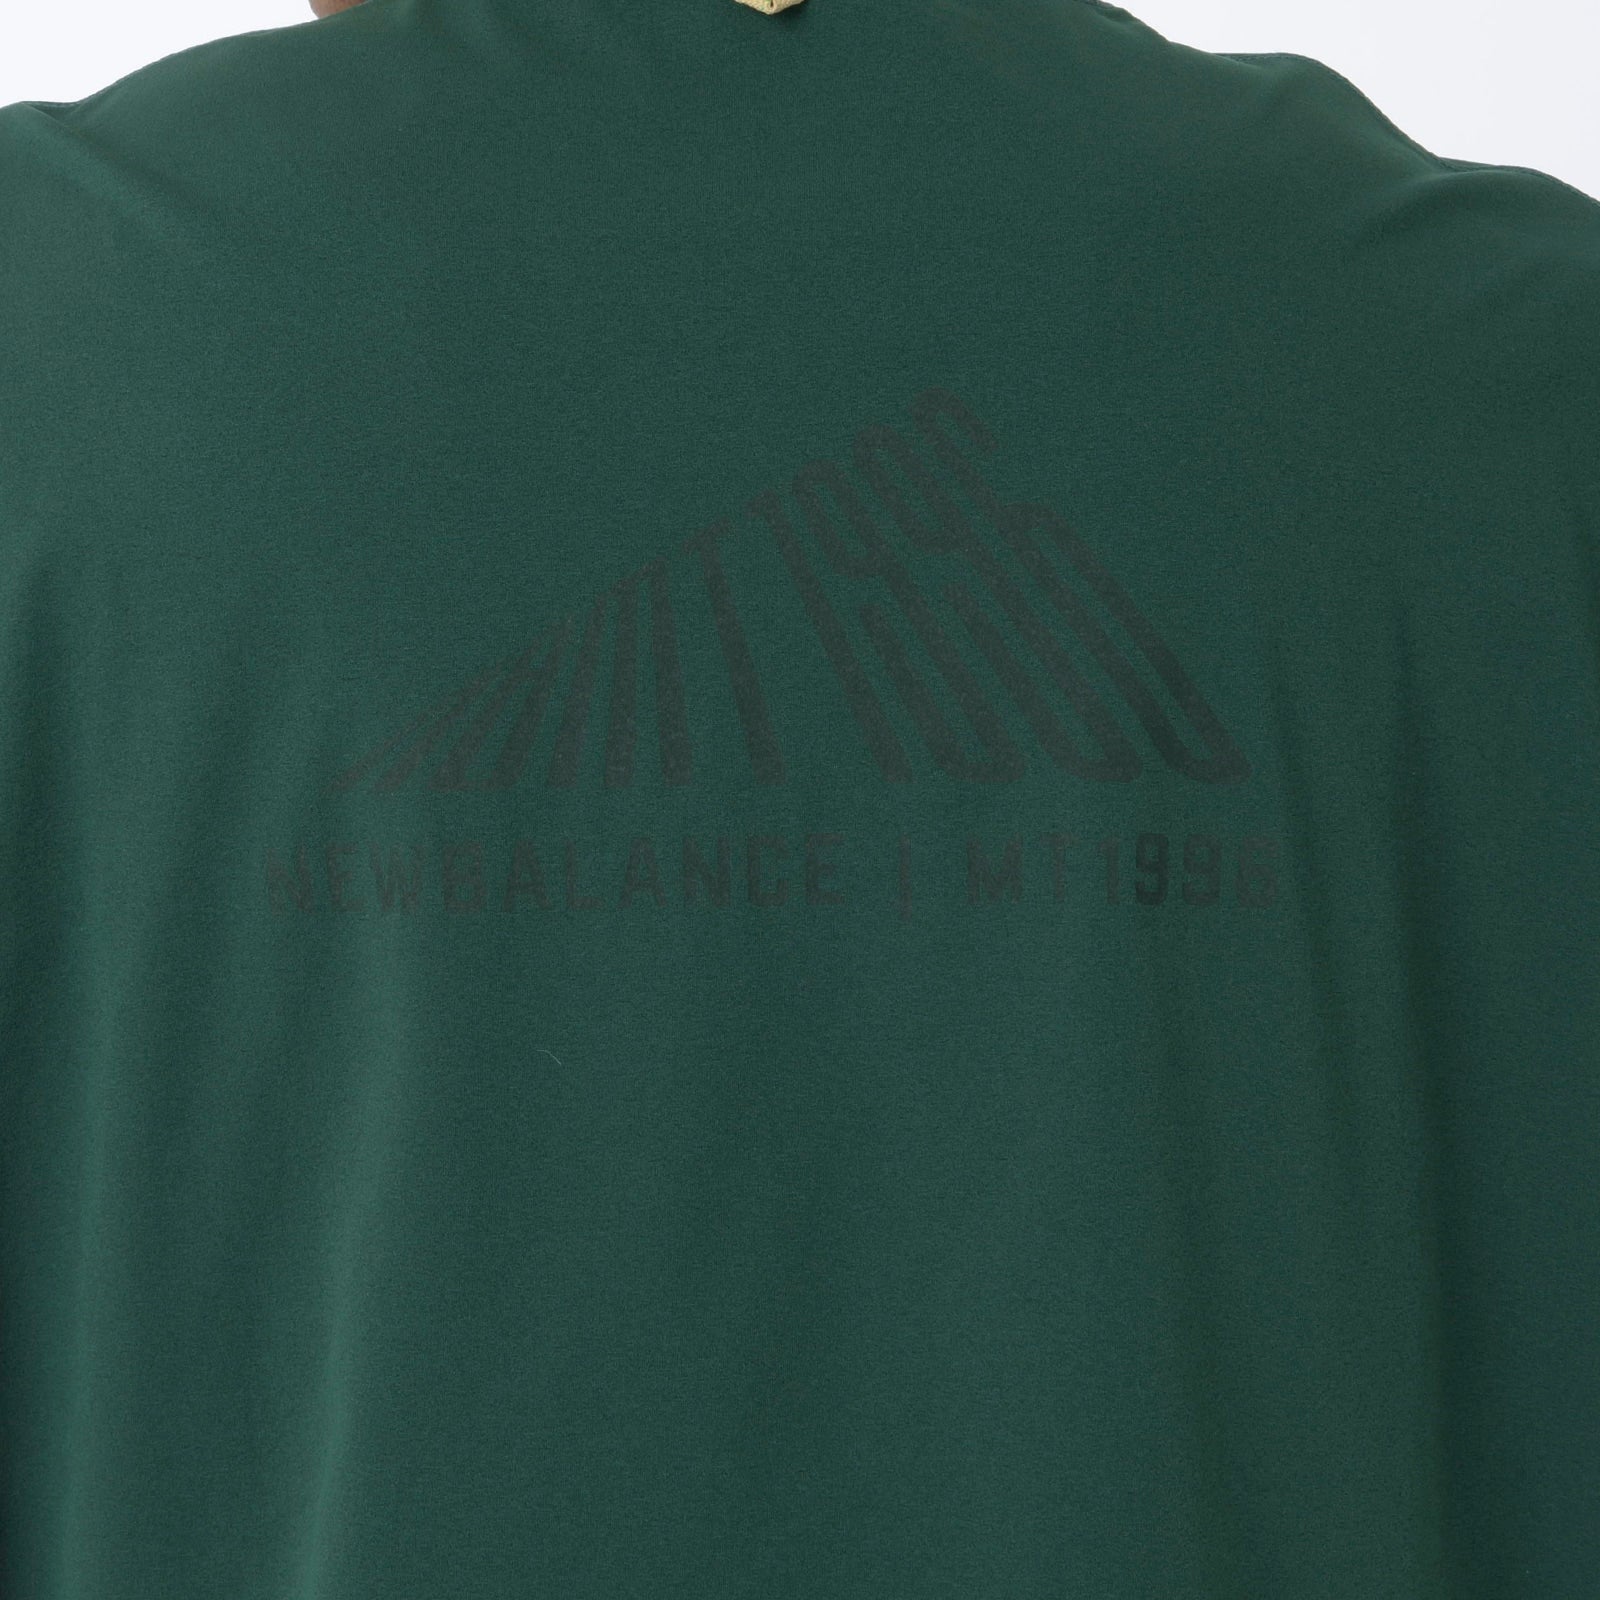 MT1996 Sunshield Long T-shirt